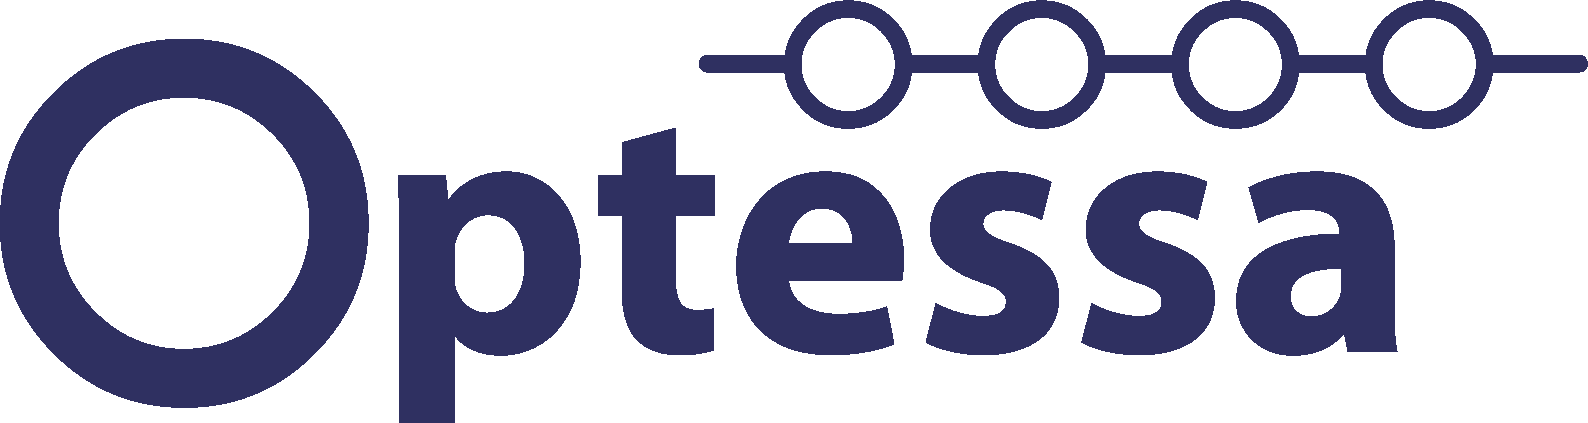 Eyelit Technologies Acquires Optessa